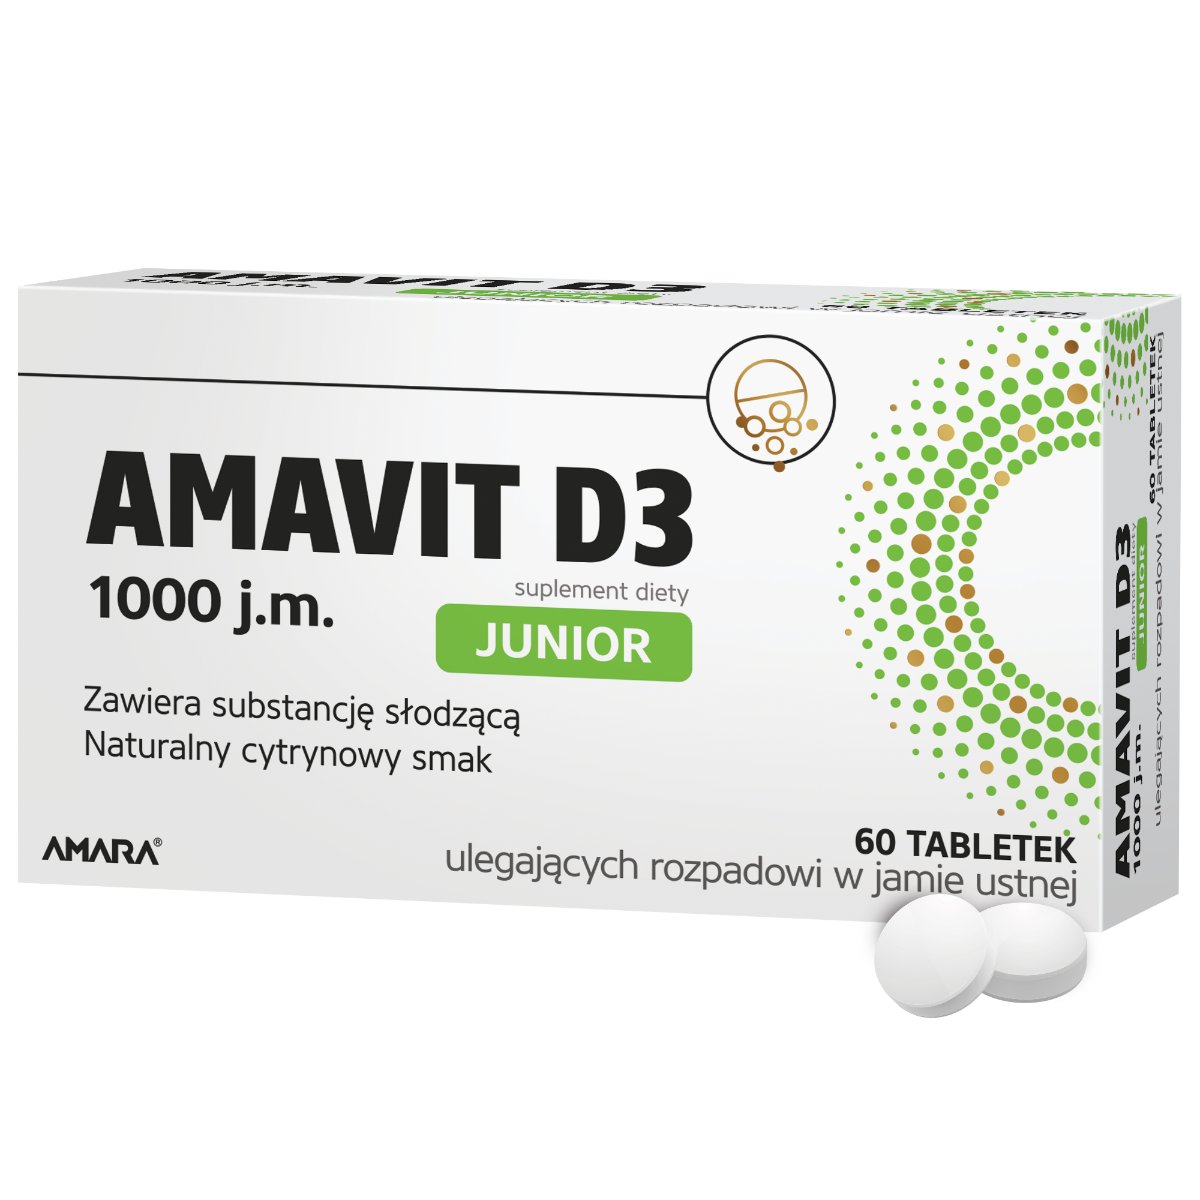 Фото - Вітаміни й мінерали Amavit D3 Junior, 1000 j.m, suplement diety, 60 tabletek ODT